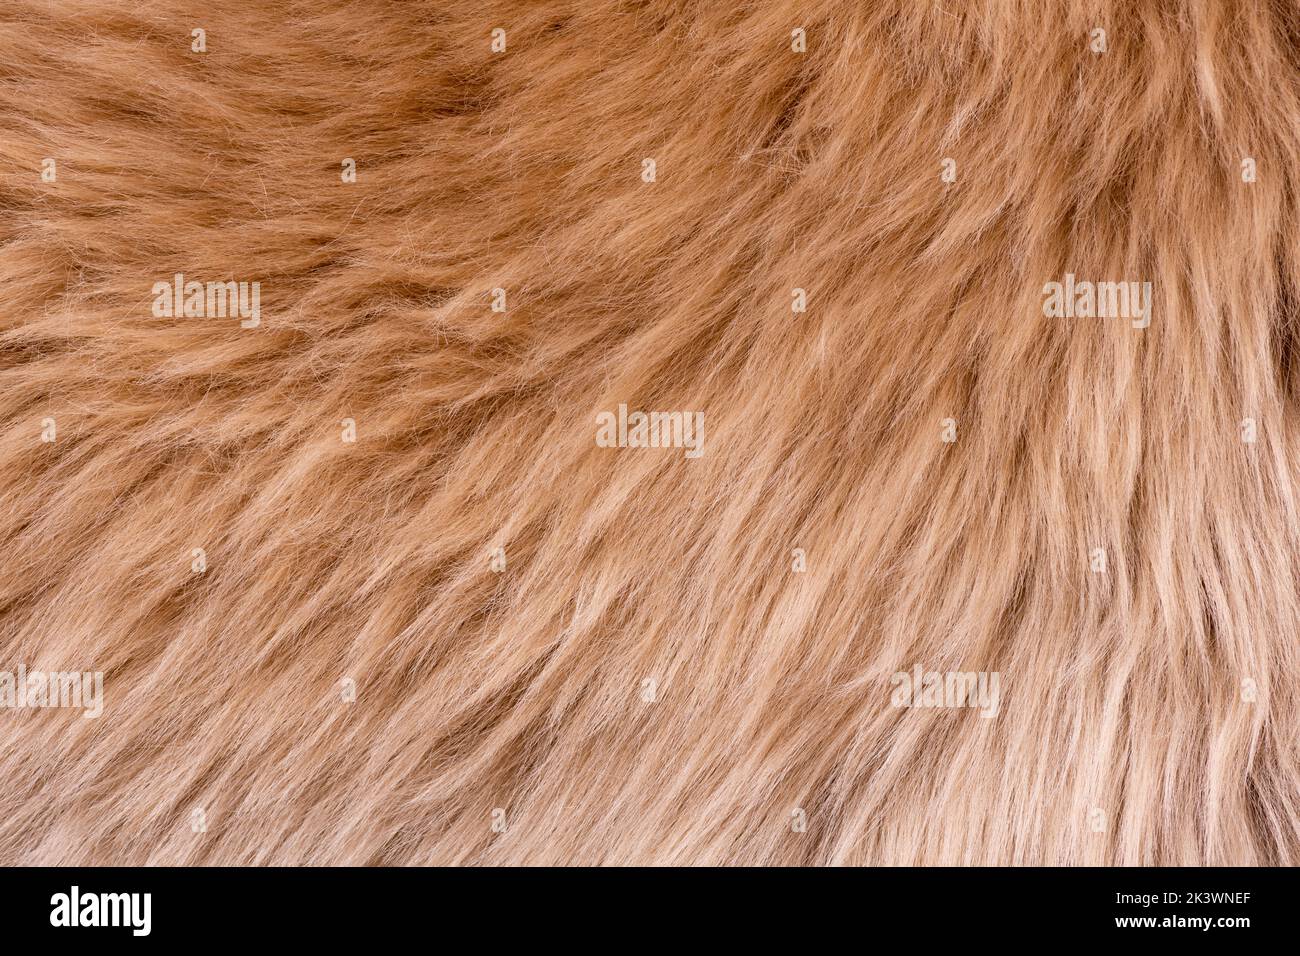 Fur texture top view. Brown fur background. Fur pattern. Texture of brown shaggy fur. Wool texture. Flaffy sheepskin fur close up Stock Photo